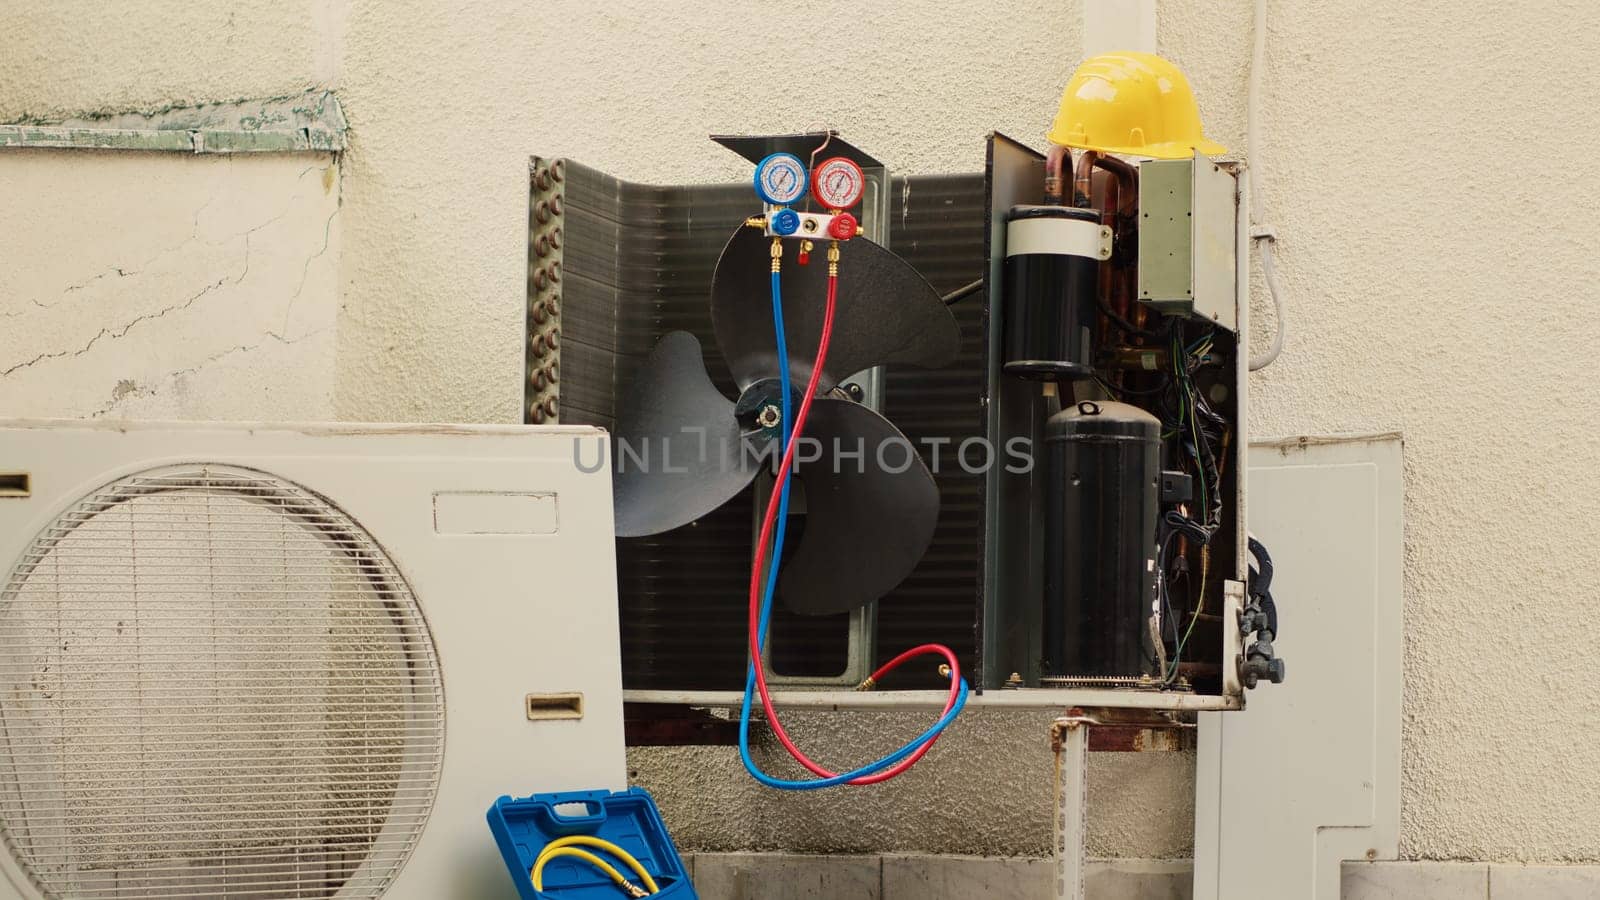 Damaged external air cooling unit by DCStudio